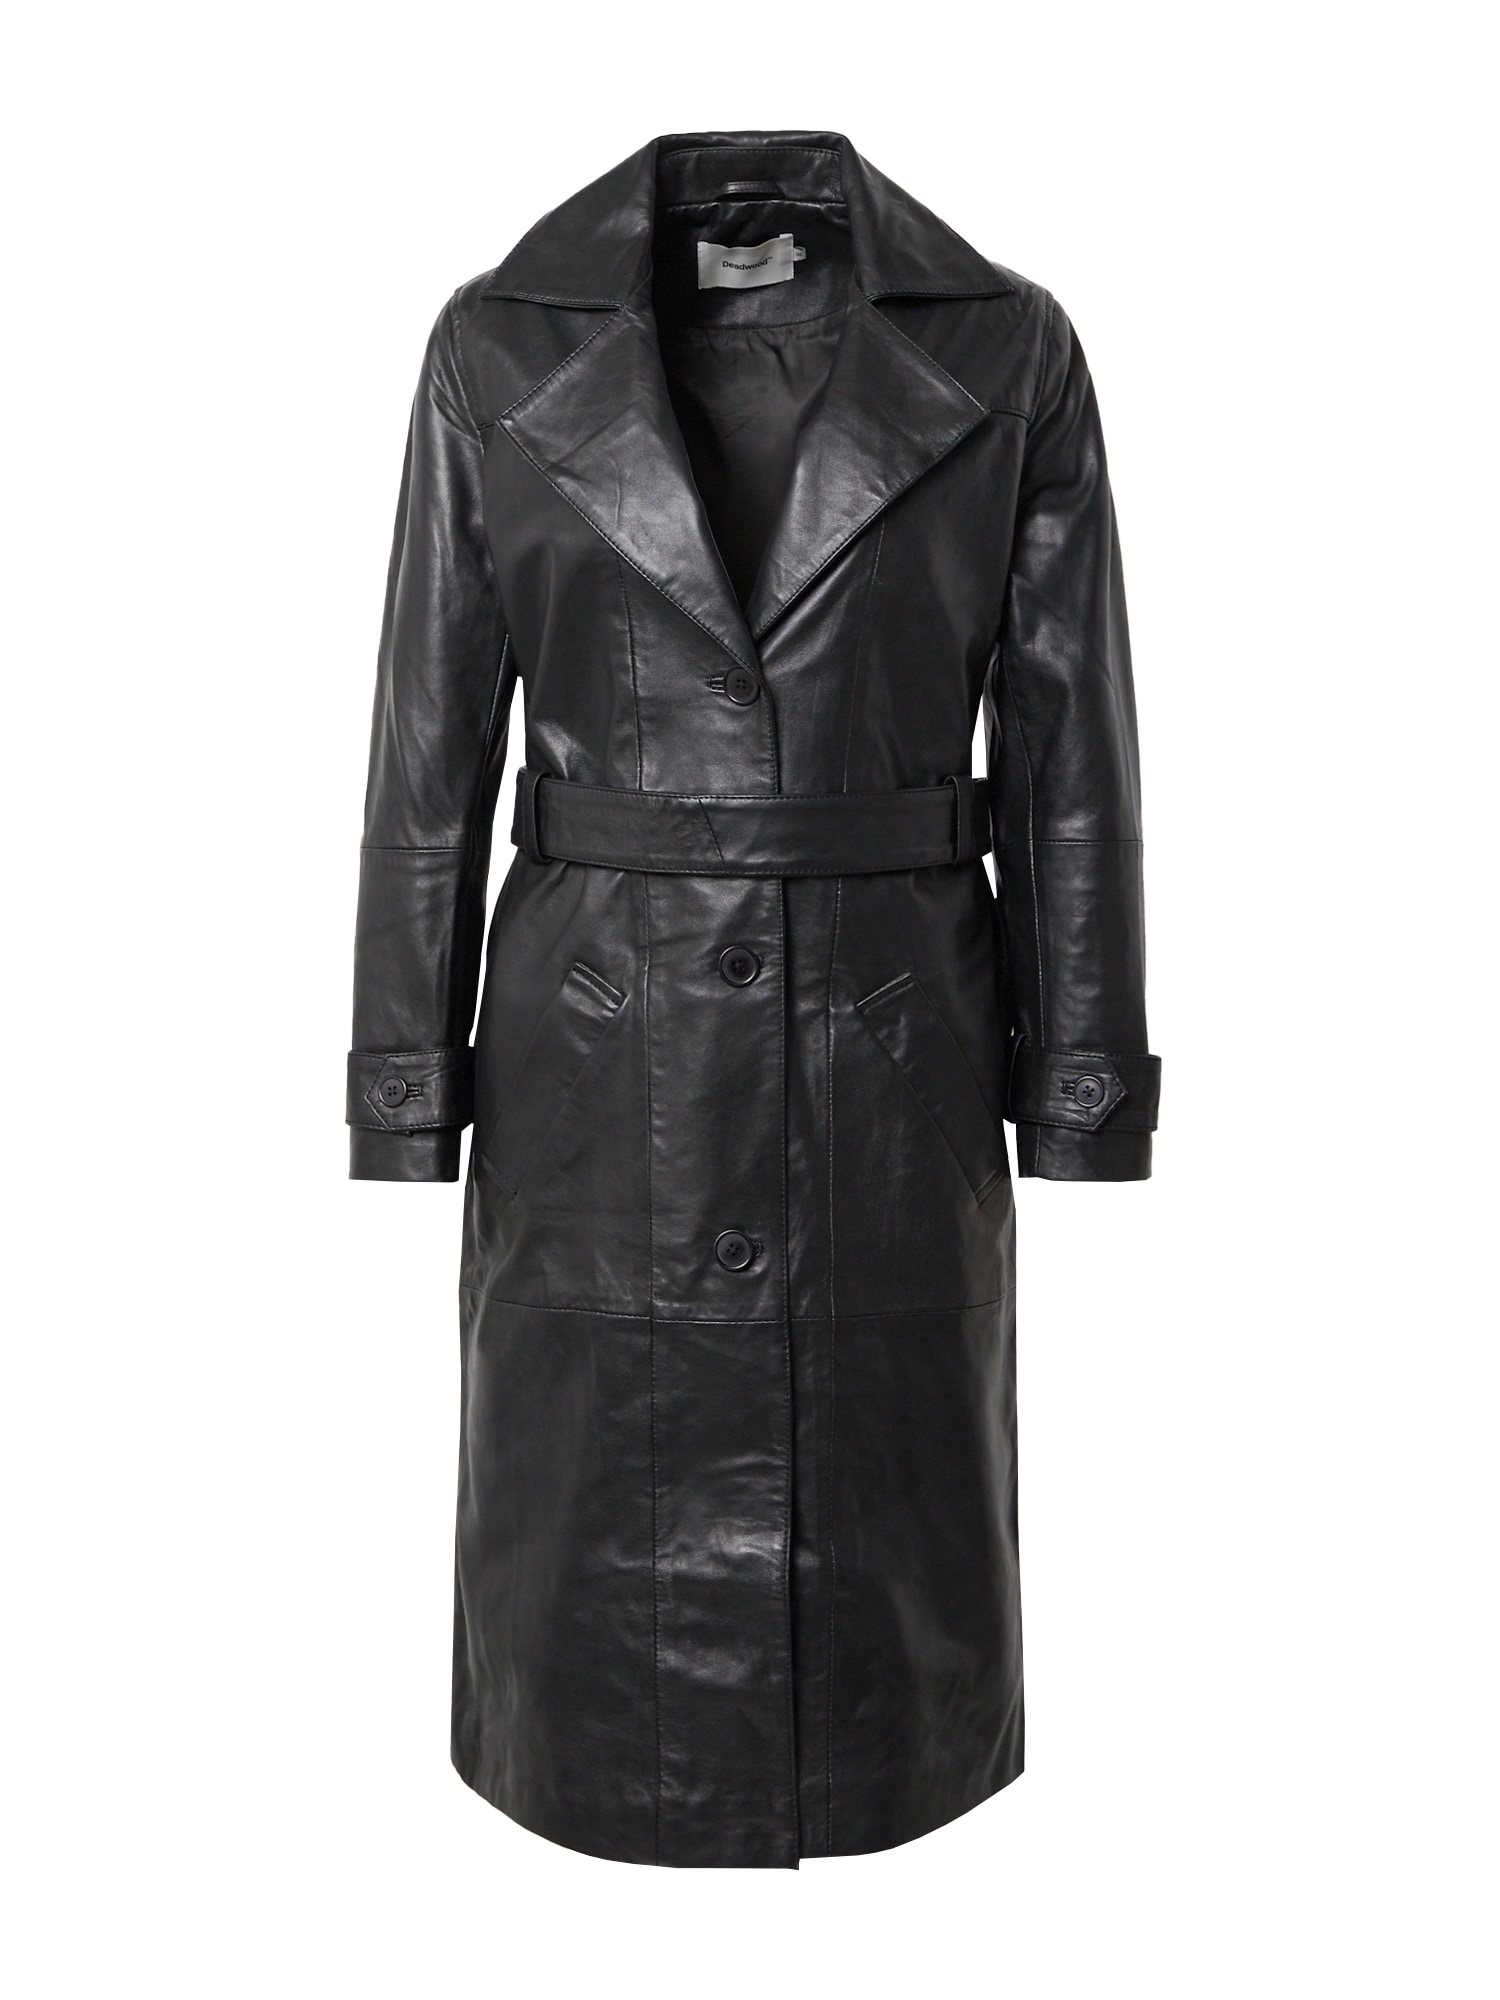 Prechodný kabát Terra čierna Deadwood